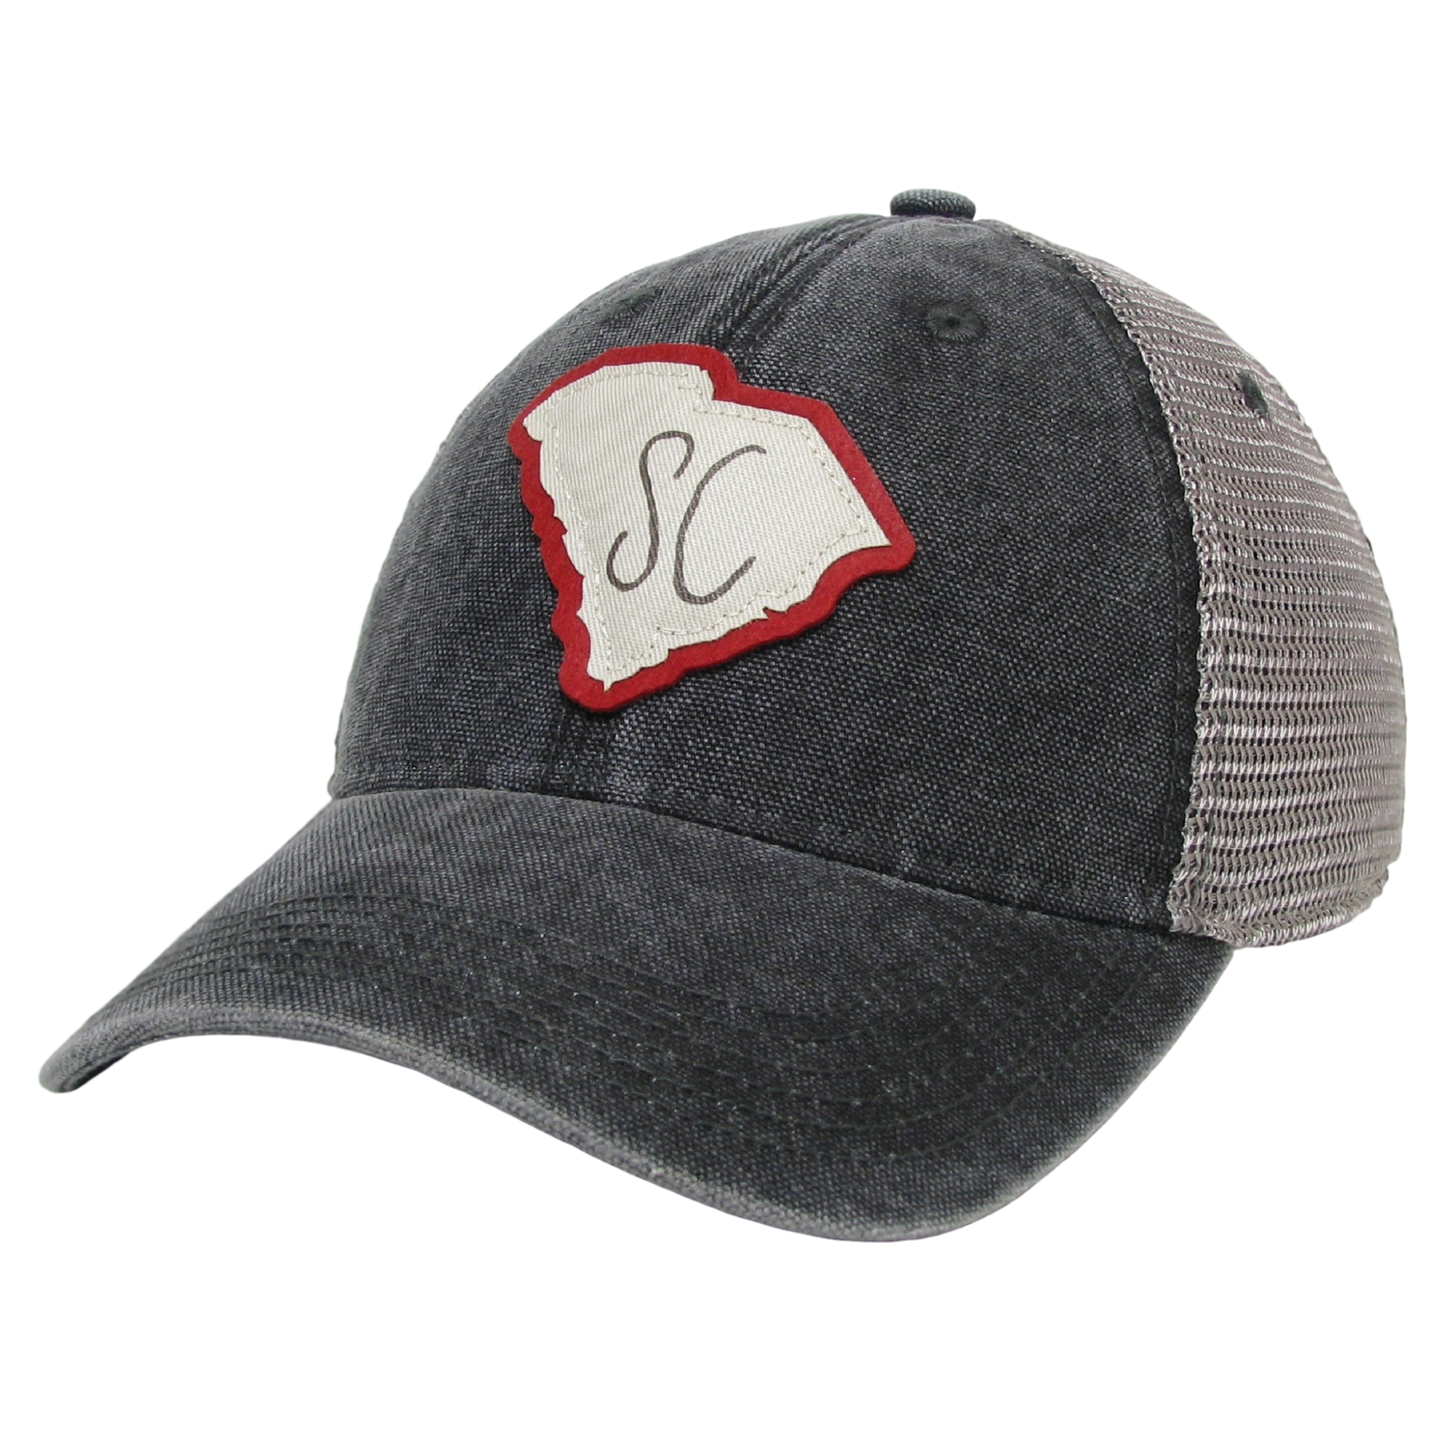 South Carolina Dashboard Trucker Hat in Black/Grey